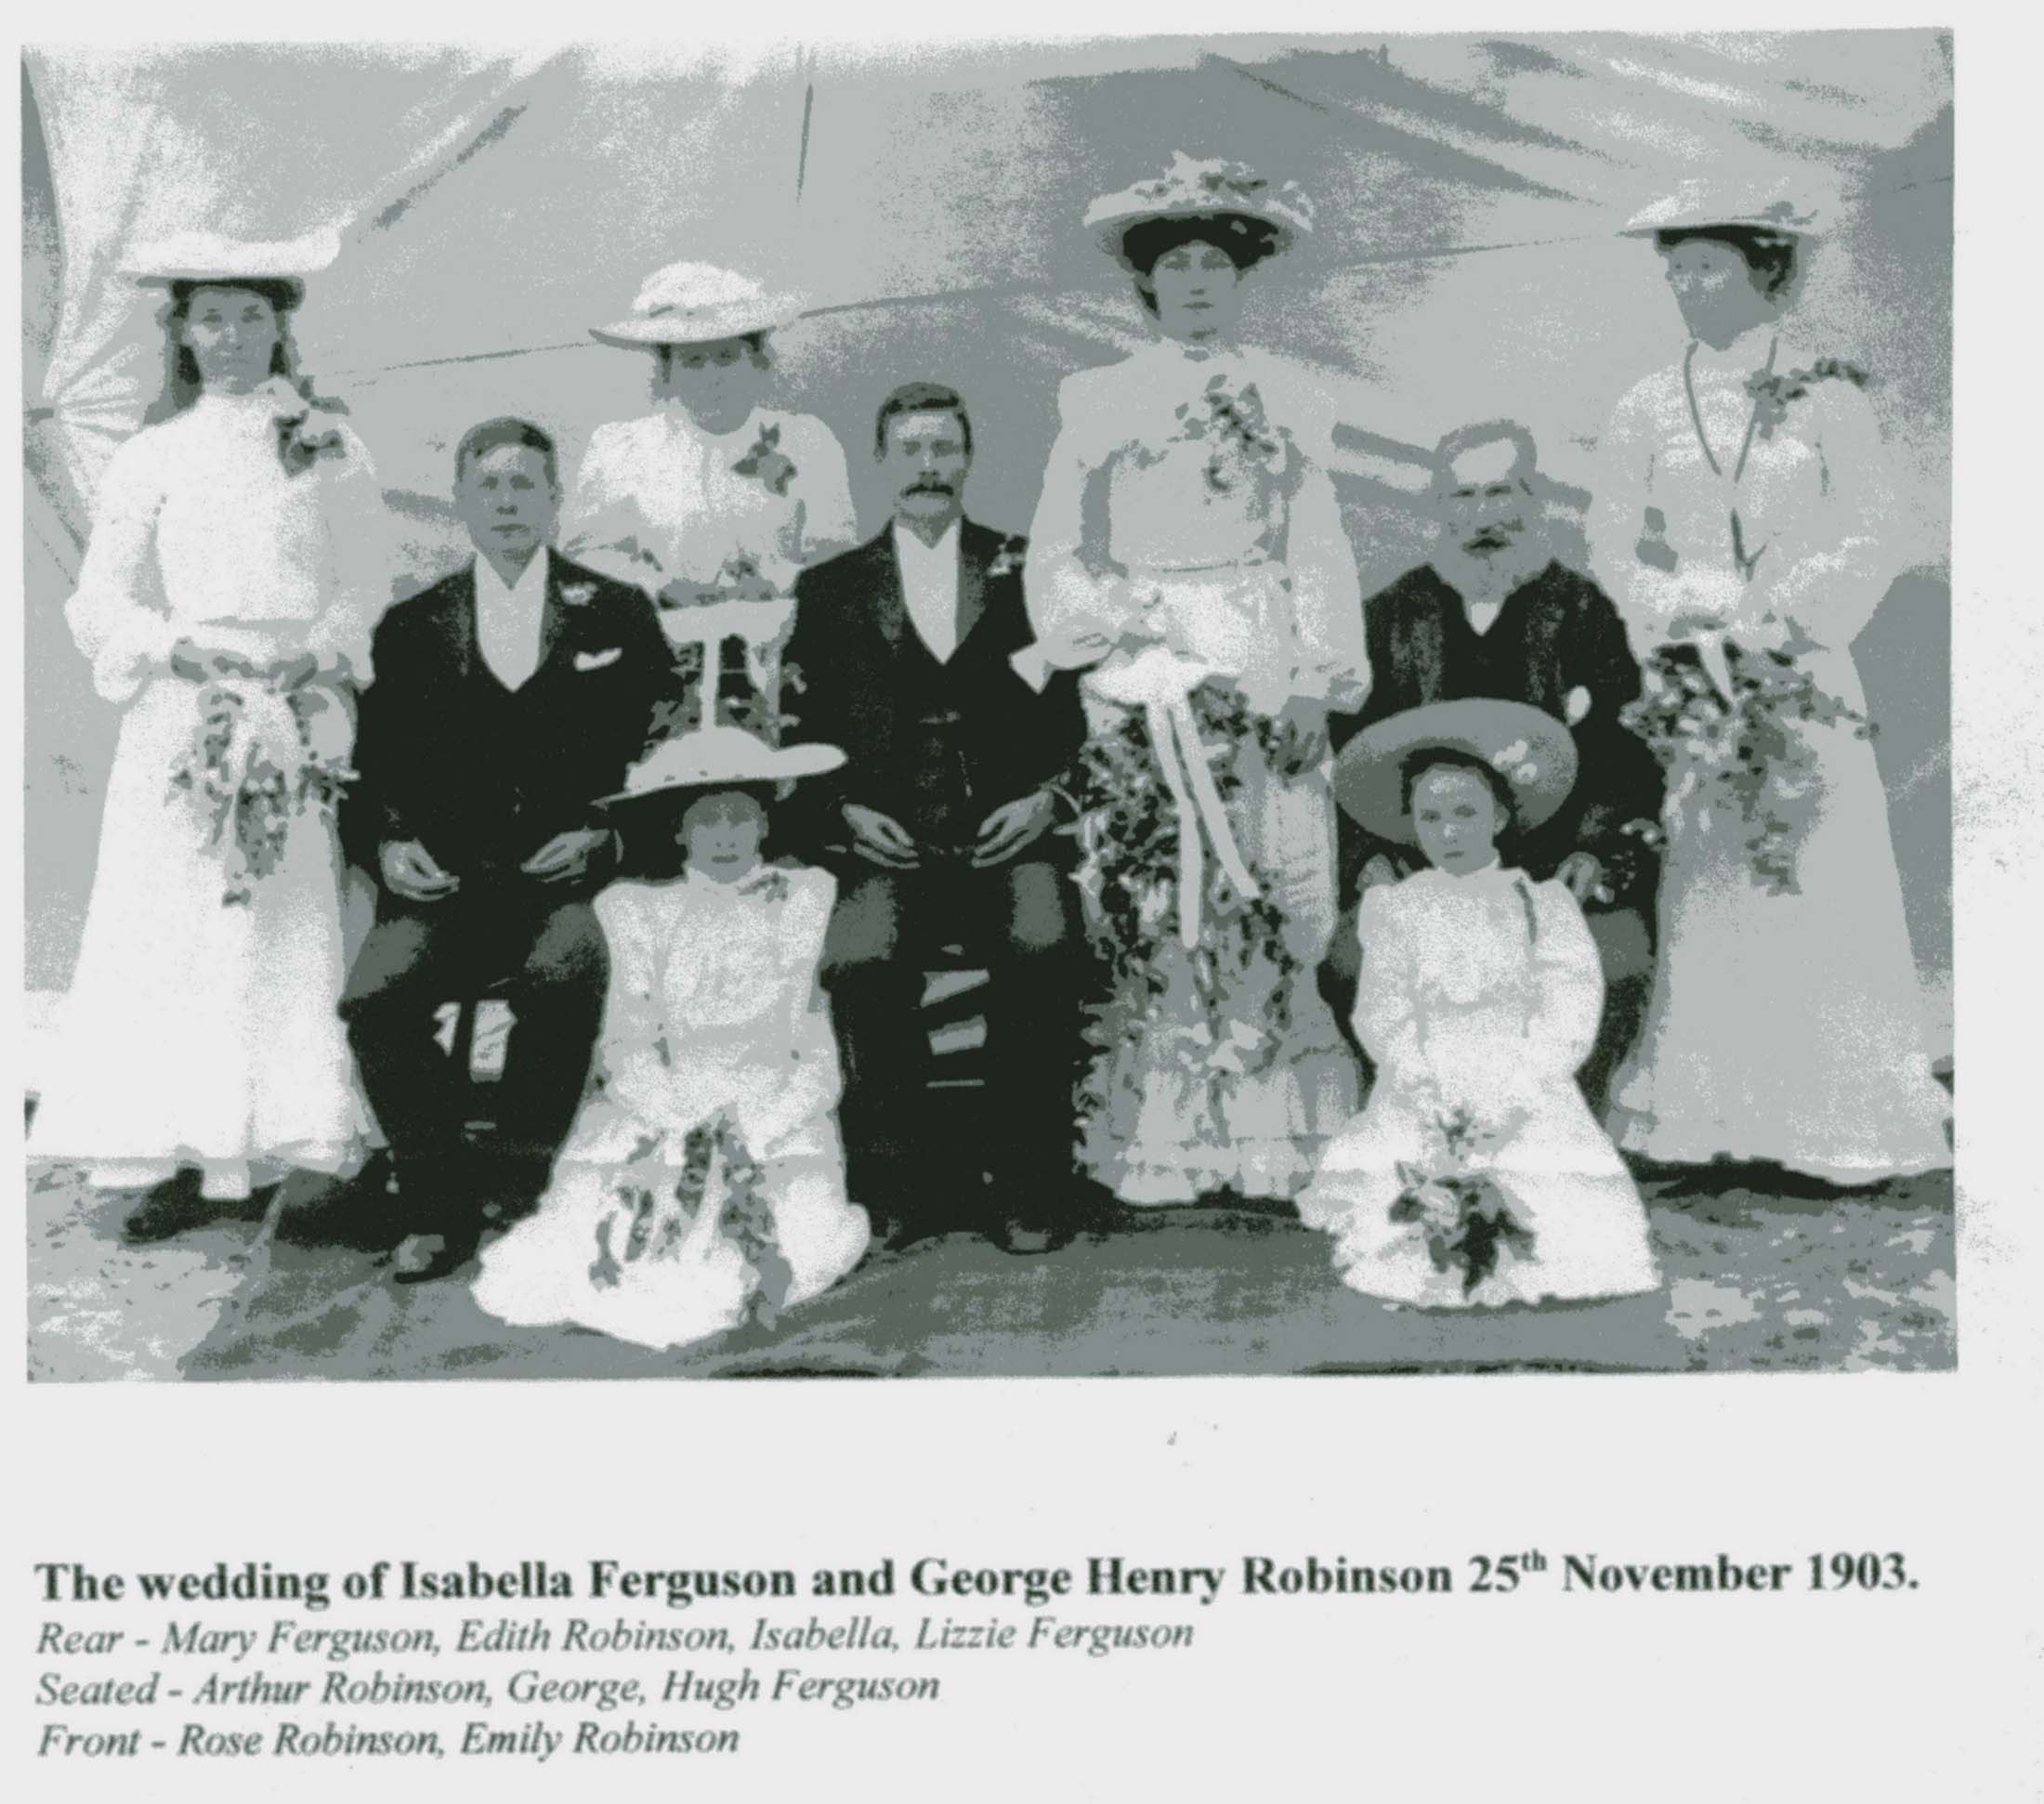 Isabella Ferguson & George Henry Robinson's Wedding